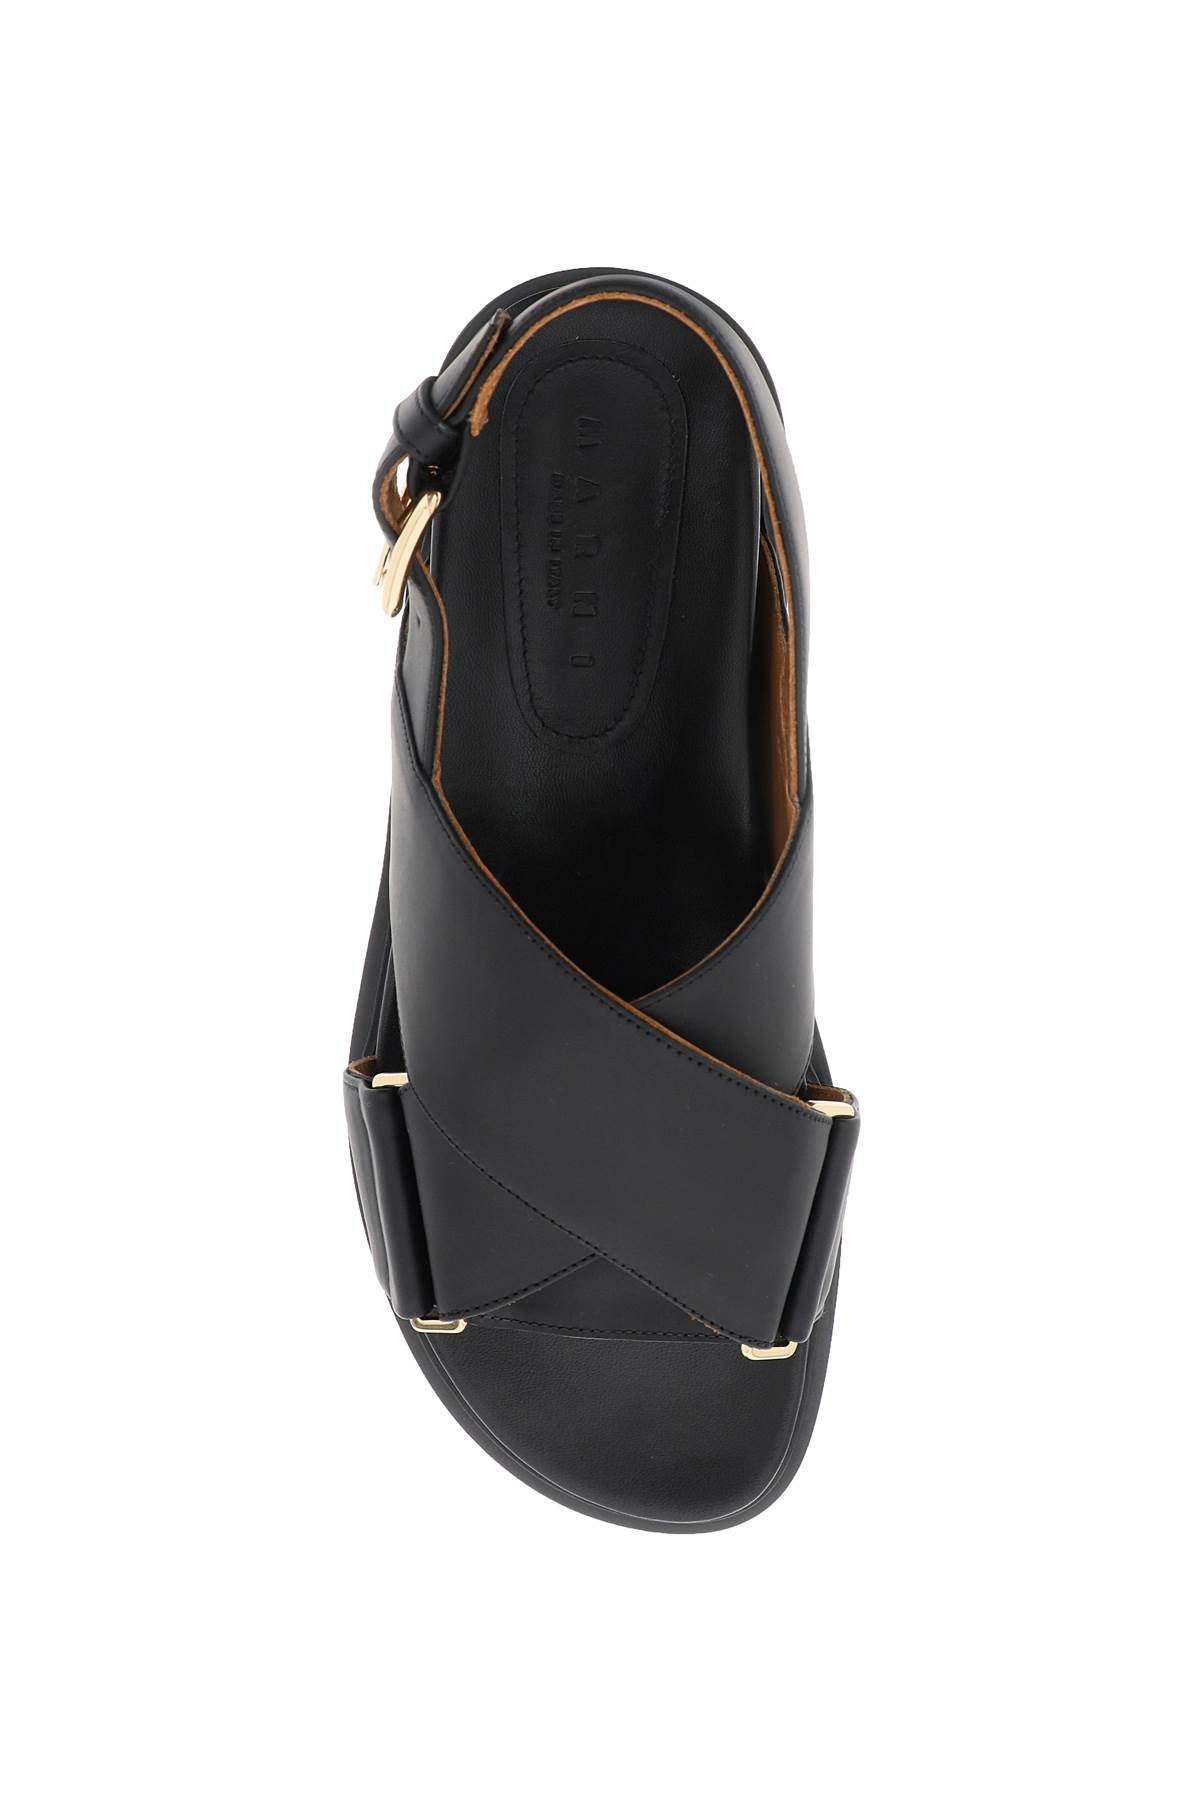 Marni fussbett leather sandals-1